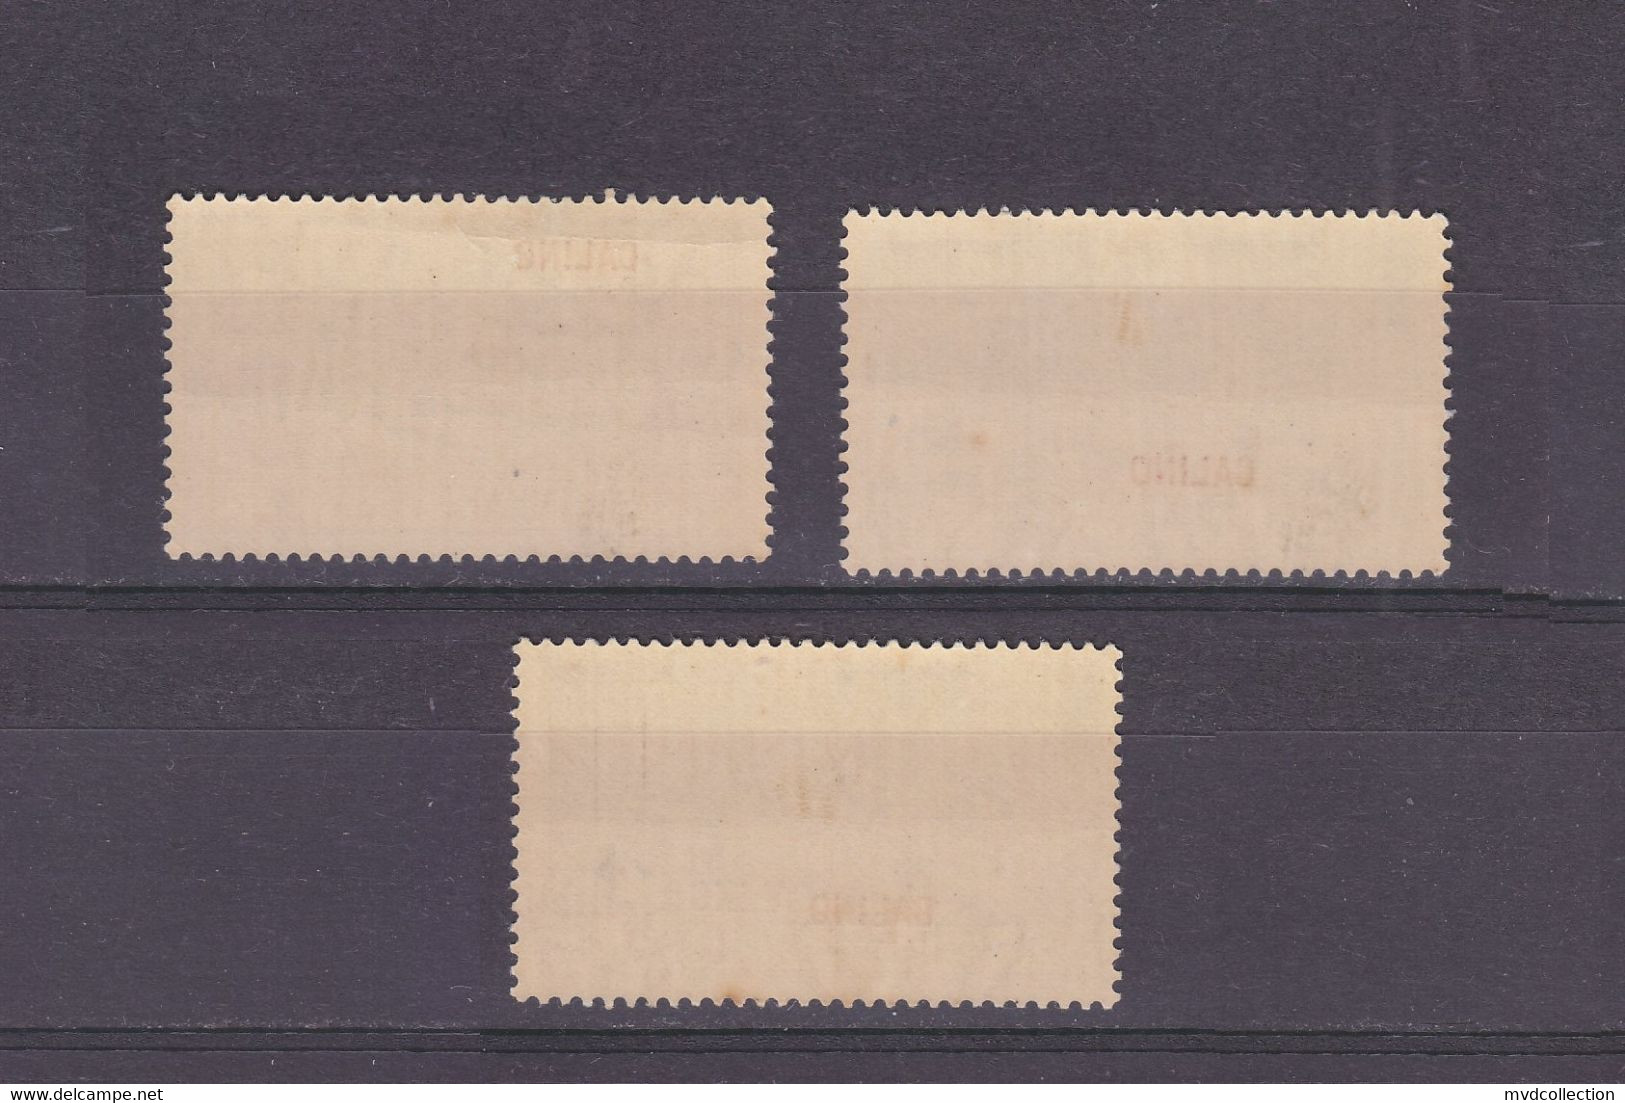 ITALY Lot CENTENARIO FERRUCCI Stamps Overprinted CALINO 1930 VF MH Original Gum - Egeo (Calino)